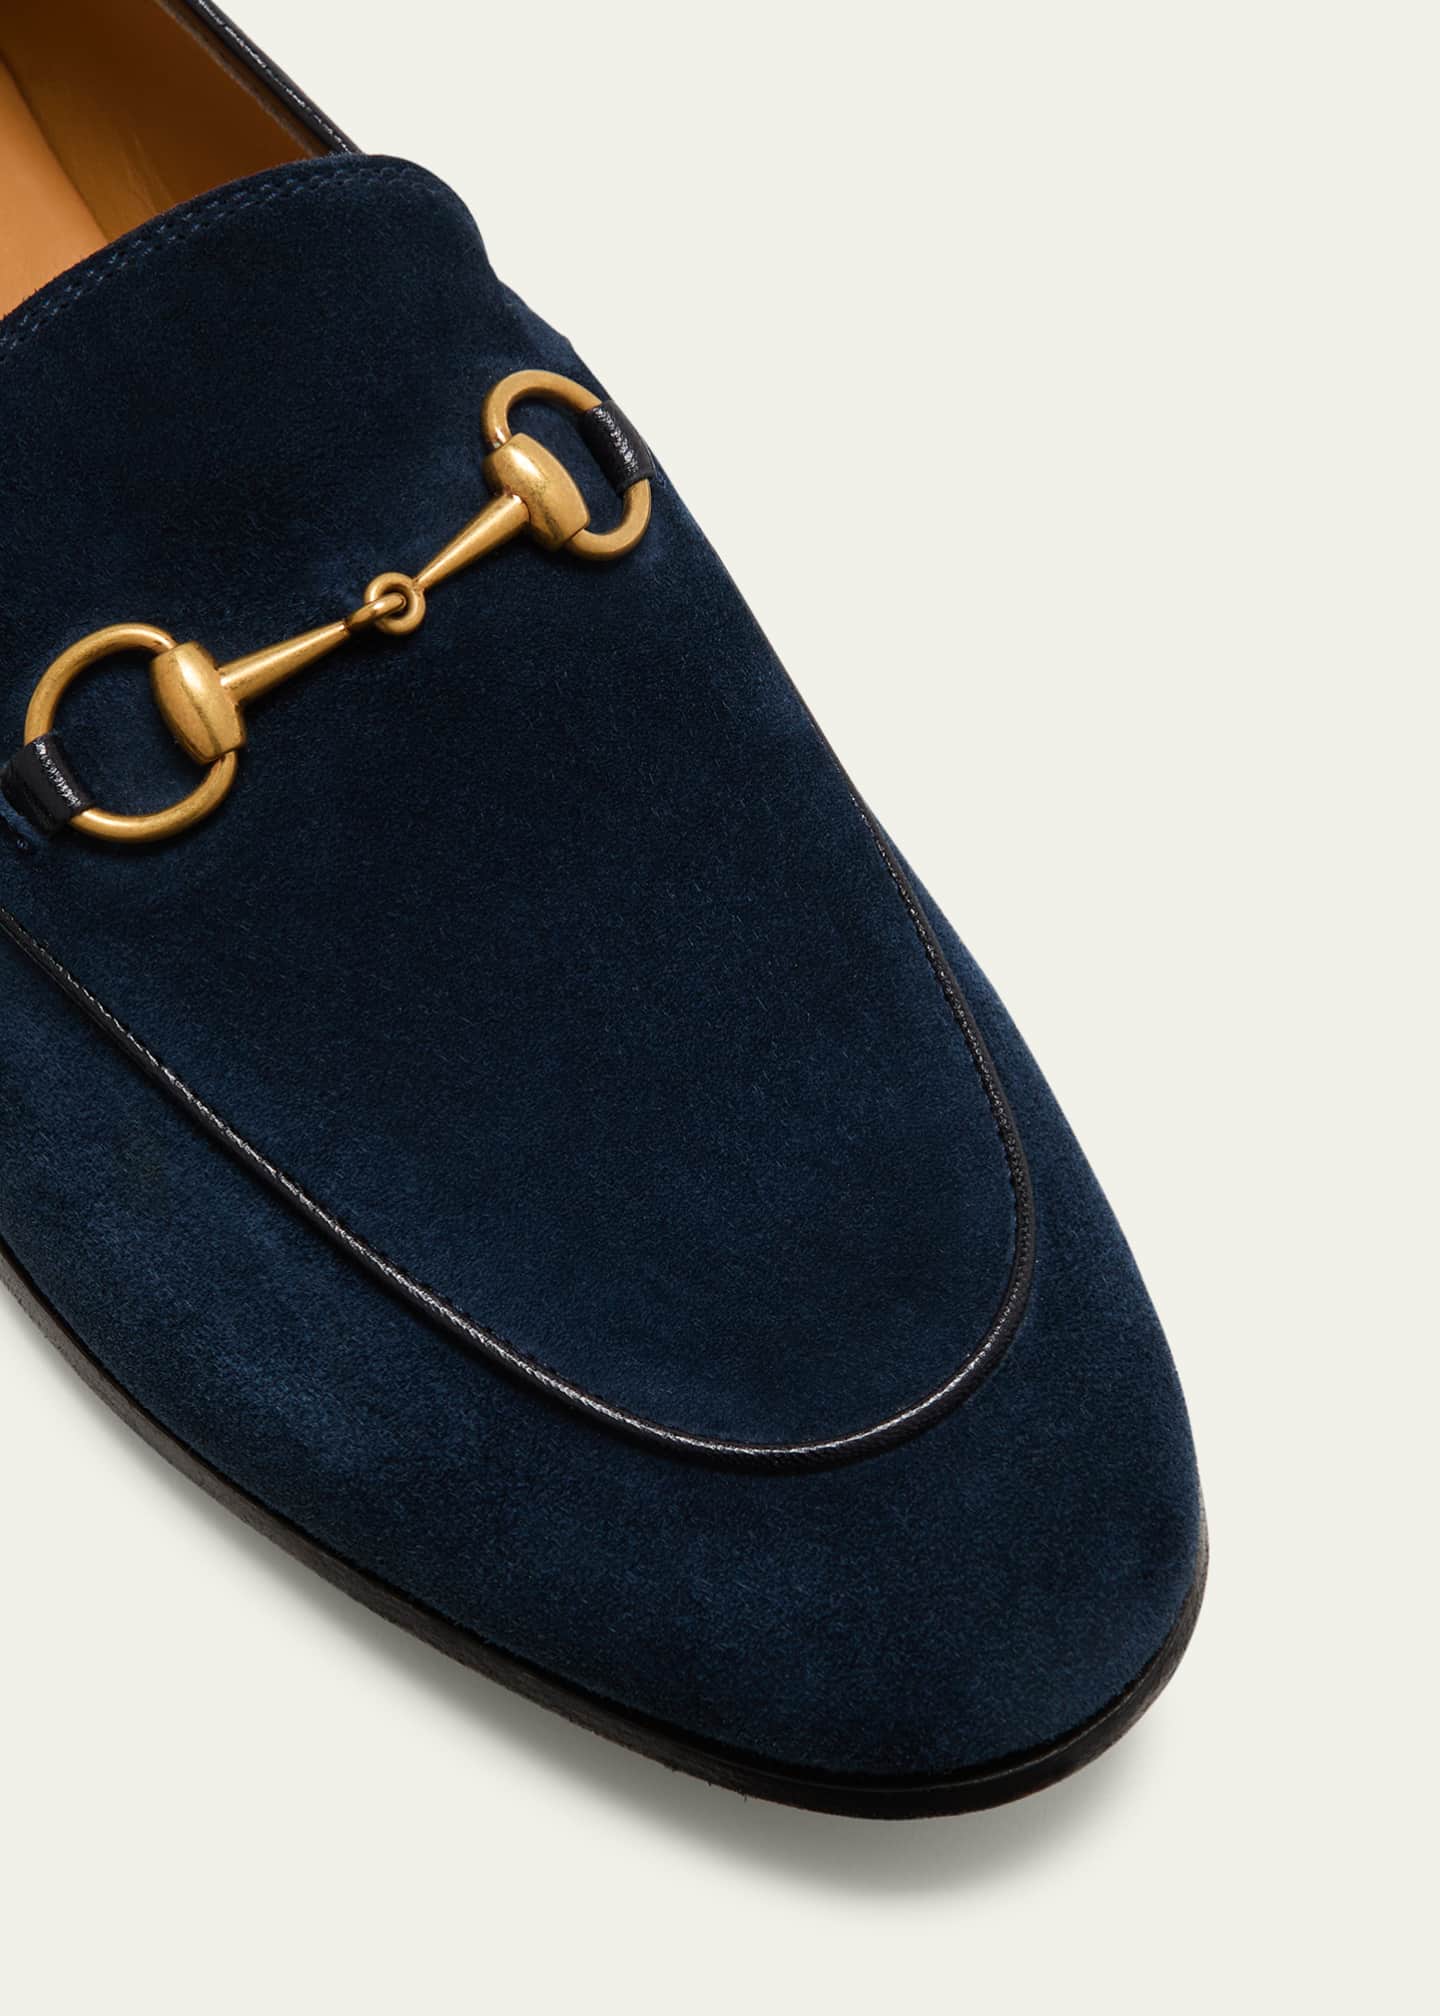 Men's Gucci Jordaan loafer in black suede